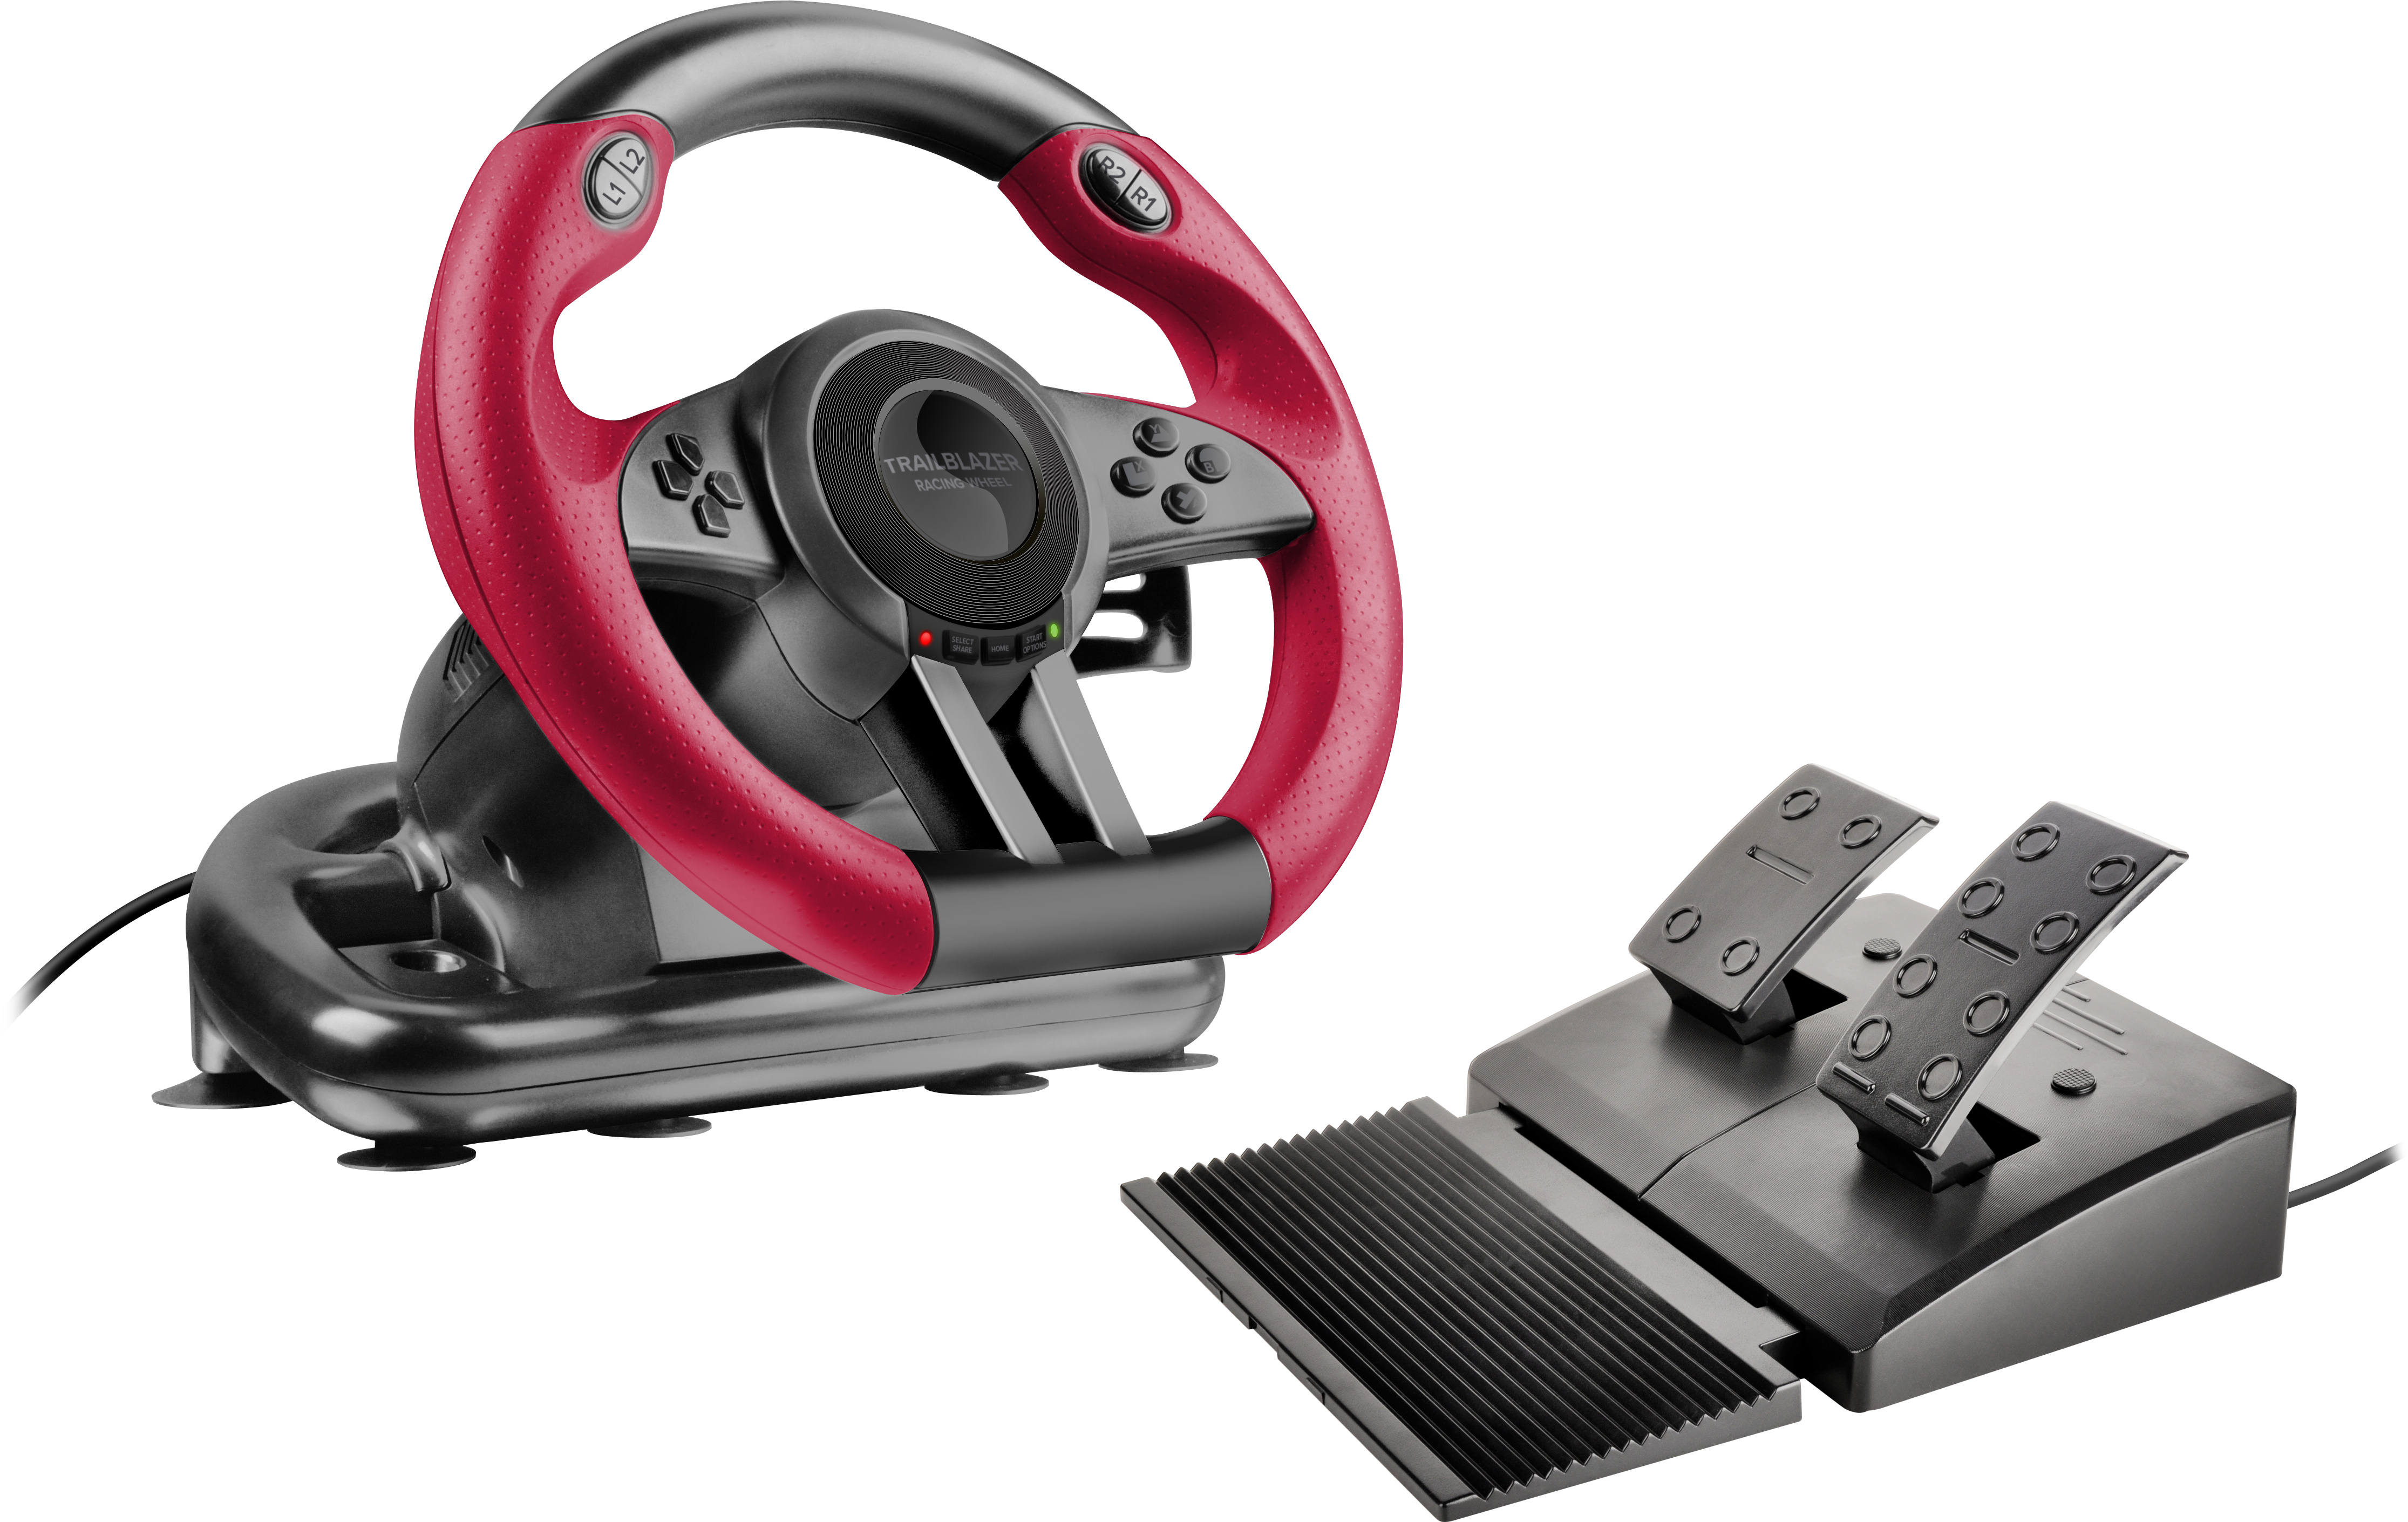 Thrustmaster T150 Ferrari Edition für 119€ – Gaming-Lenkrad mit